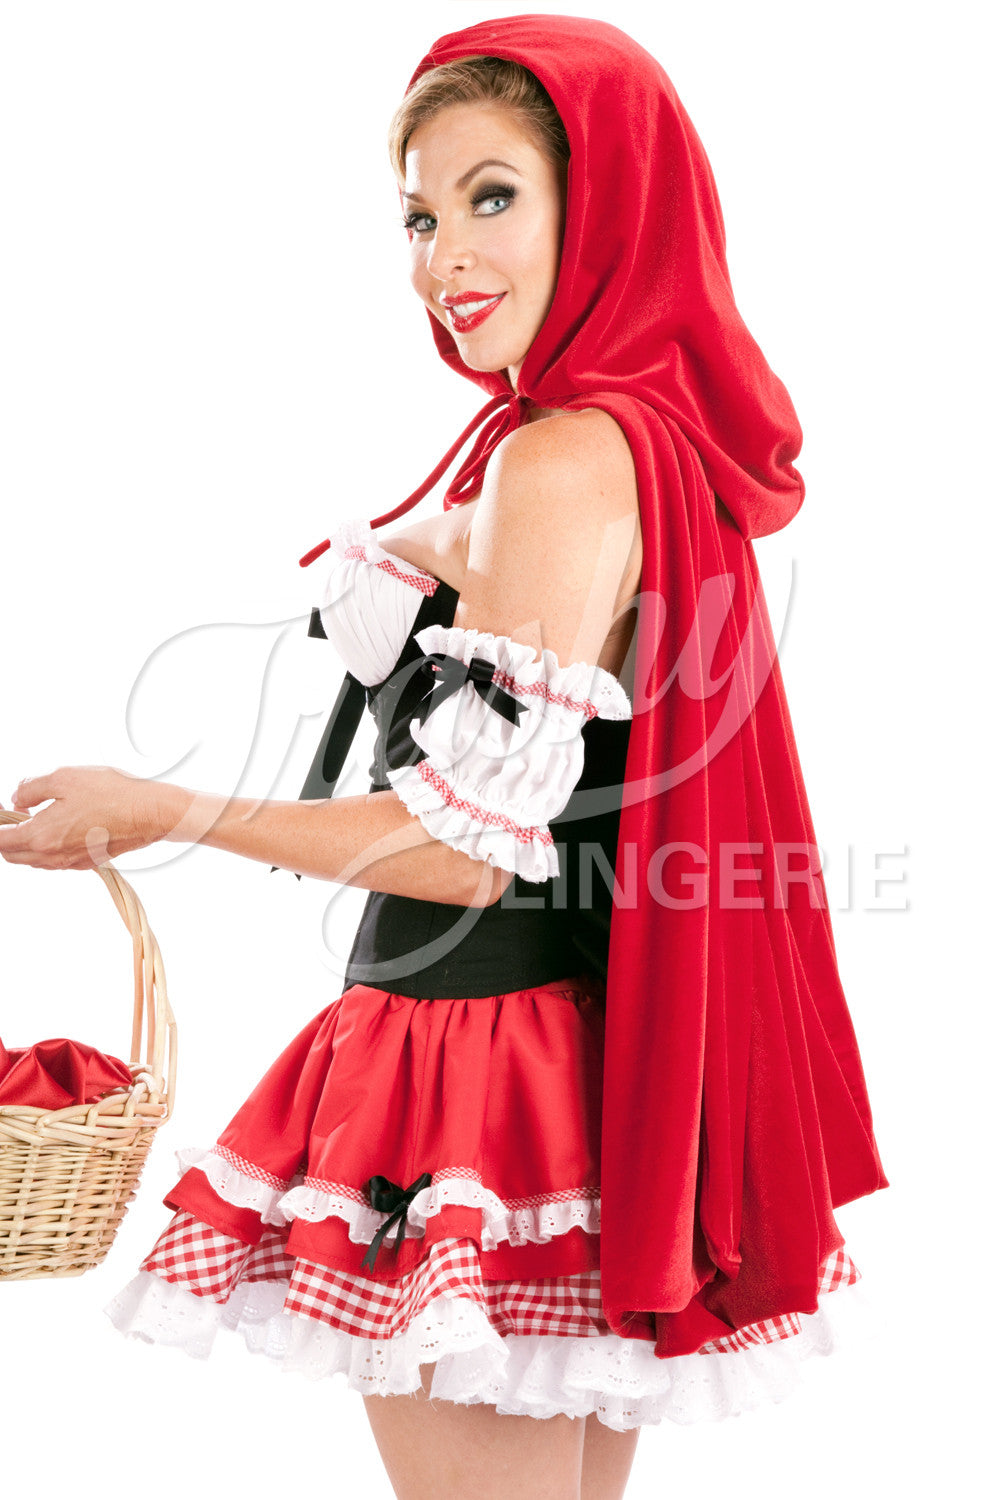 Bridgette Red Riding Hood Corset